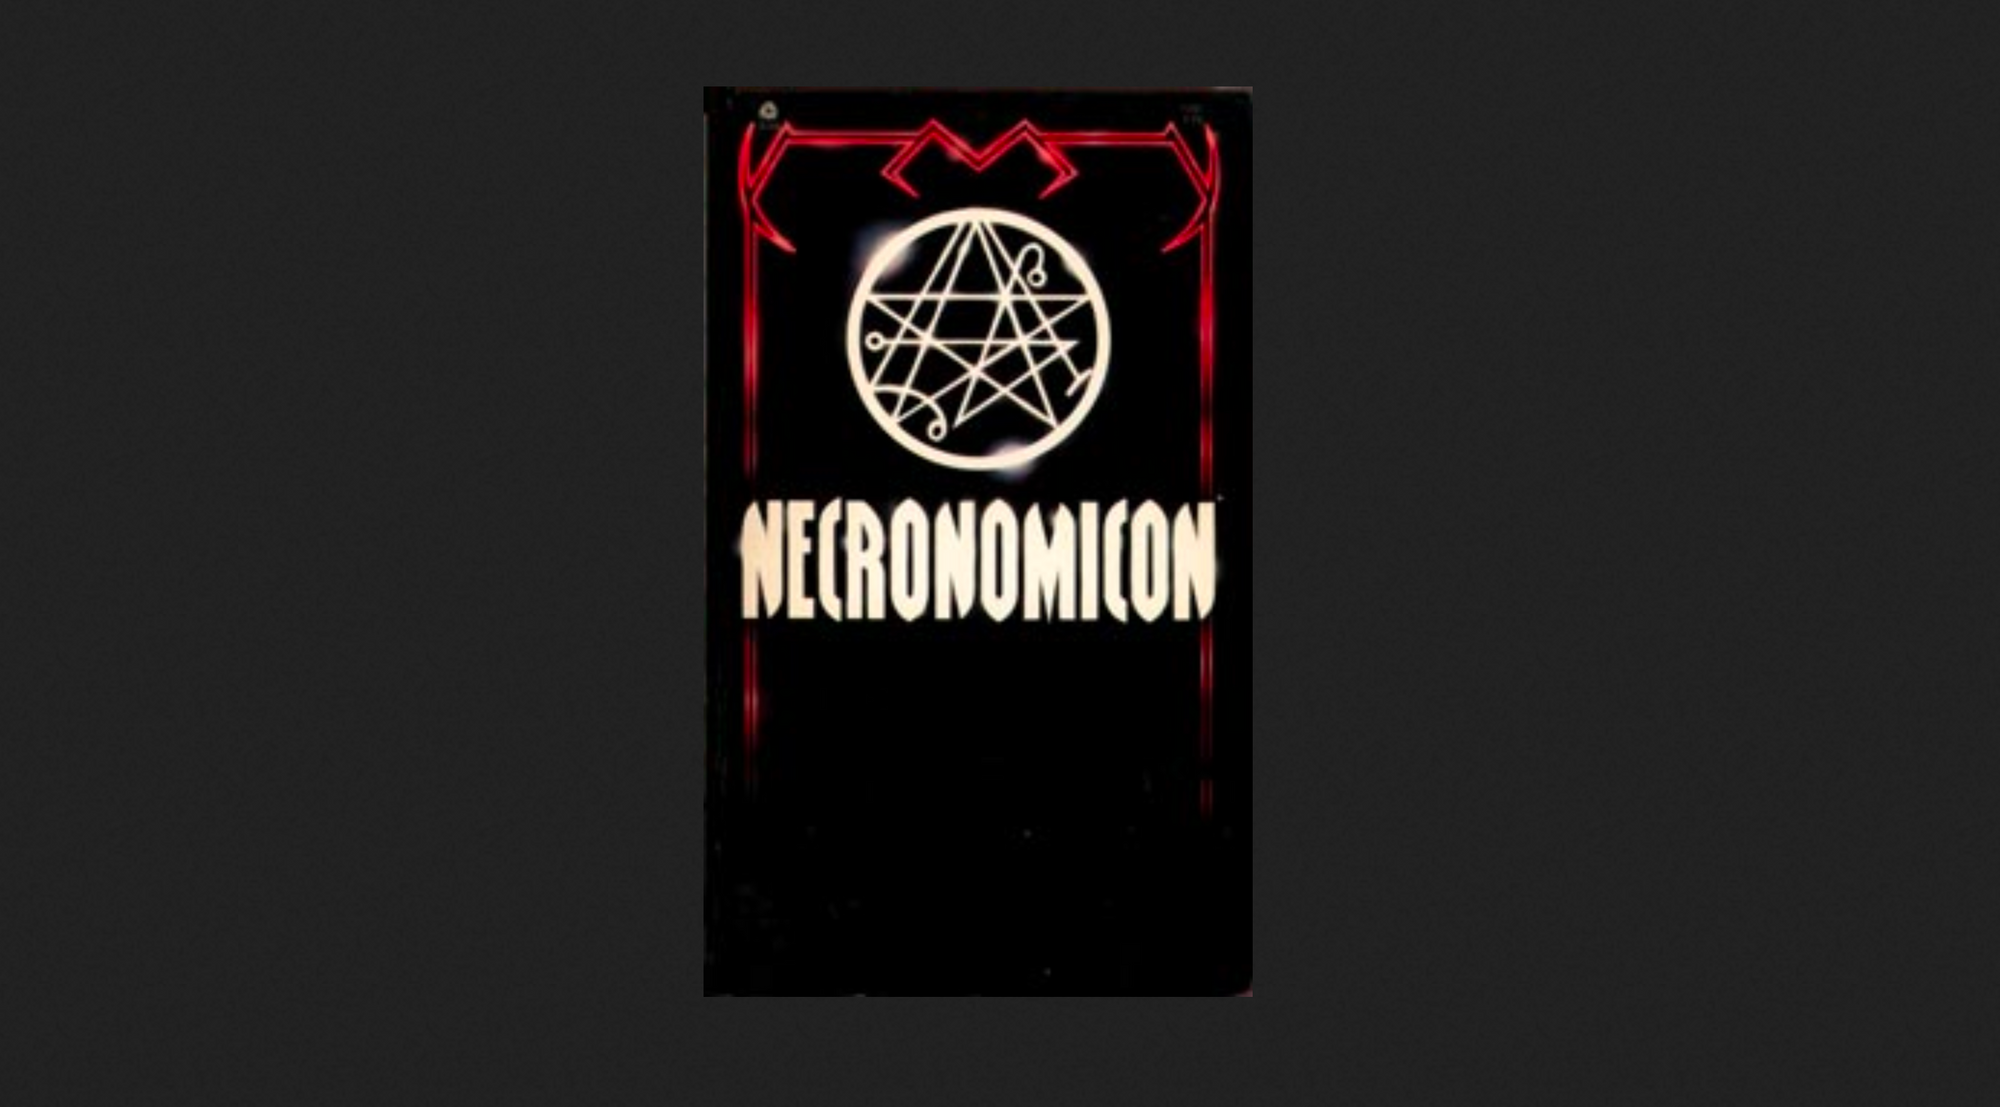 Front cover of Simon's Necronomicon